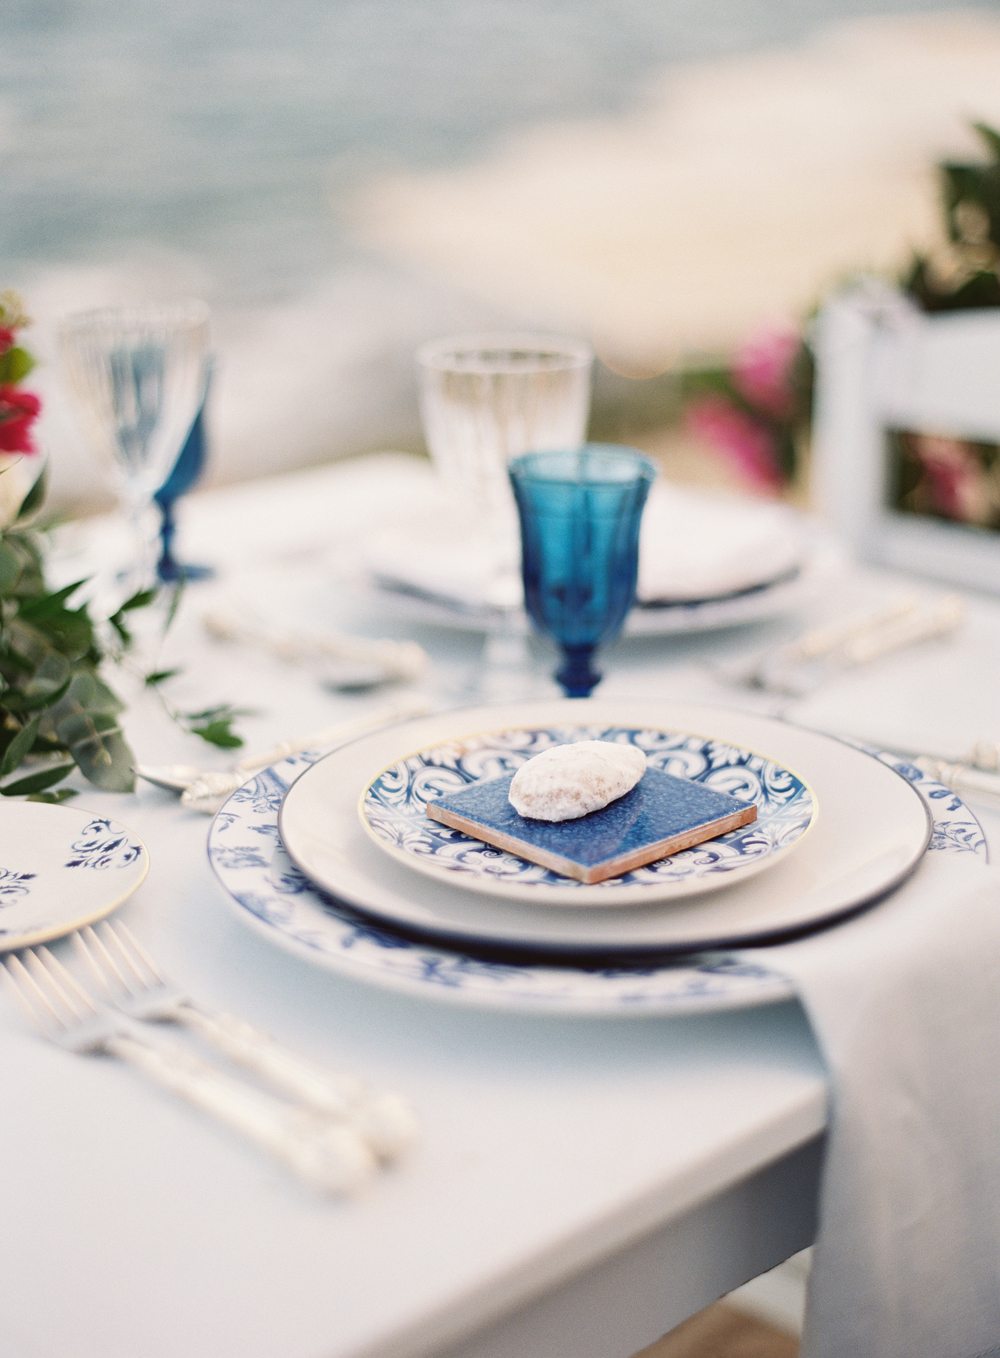 Mykonos wedding inspiration - Greek wedding photographers Les Anagnou - Greece wedding photographers